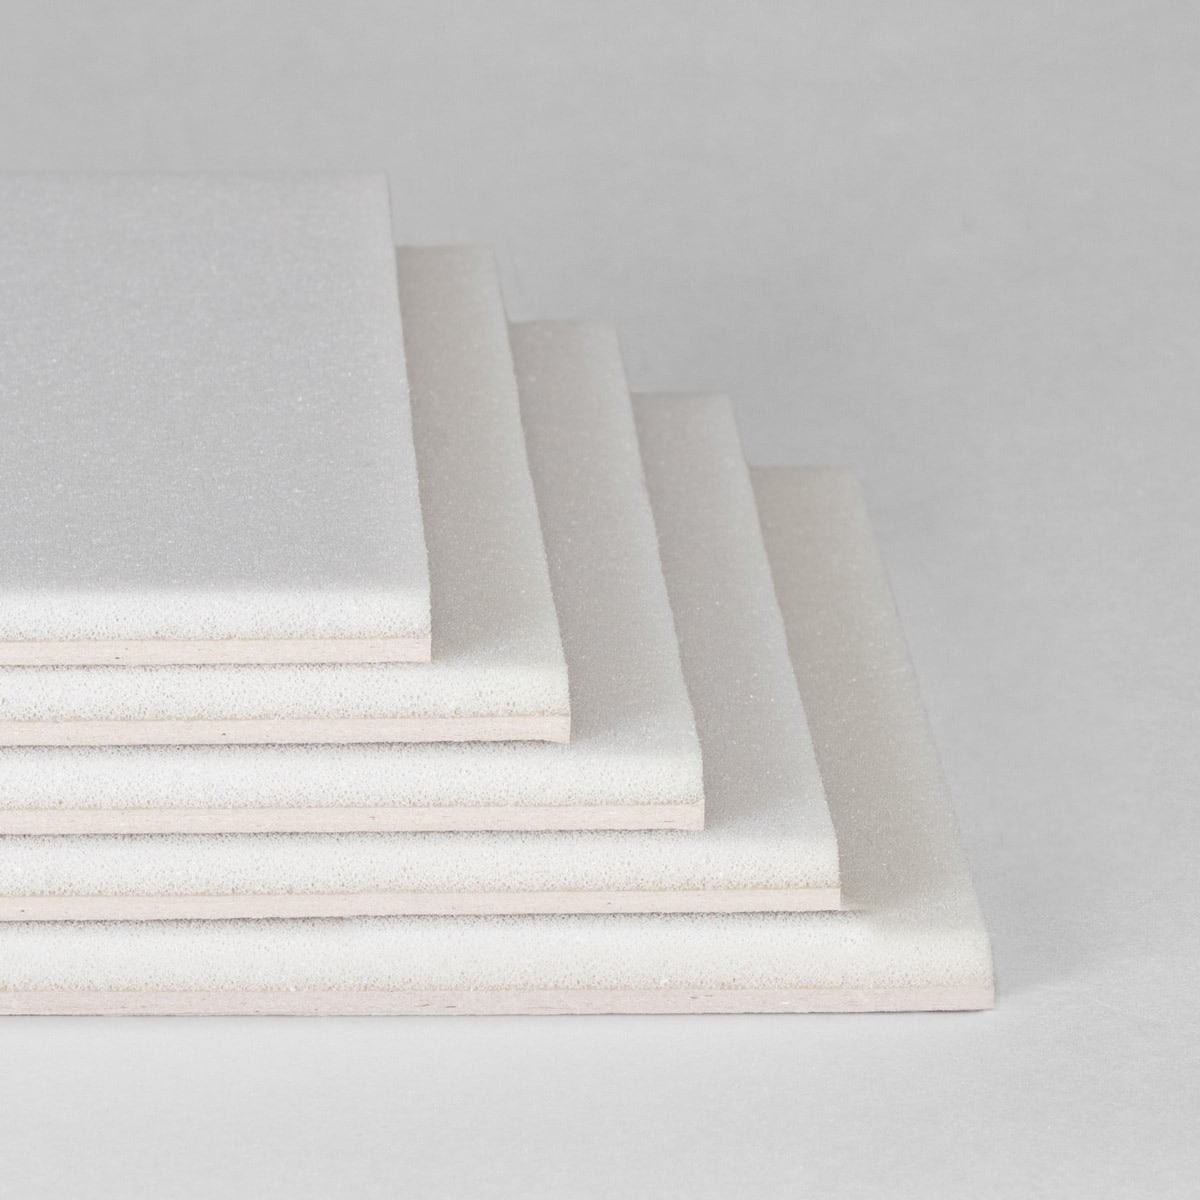 Sheet lamination service foam glued to grey board